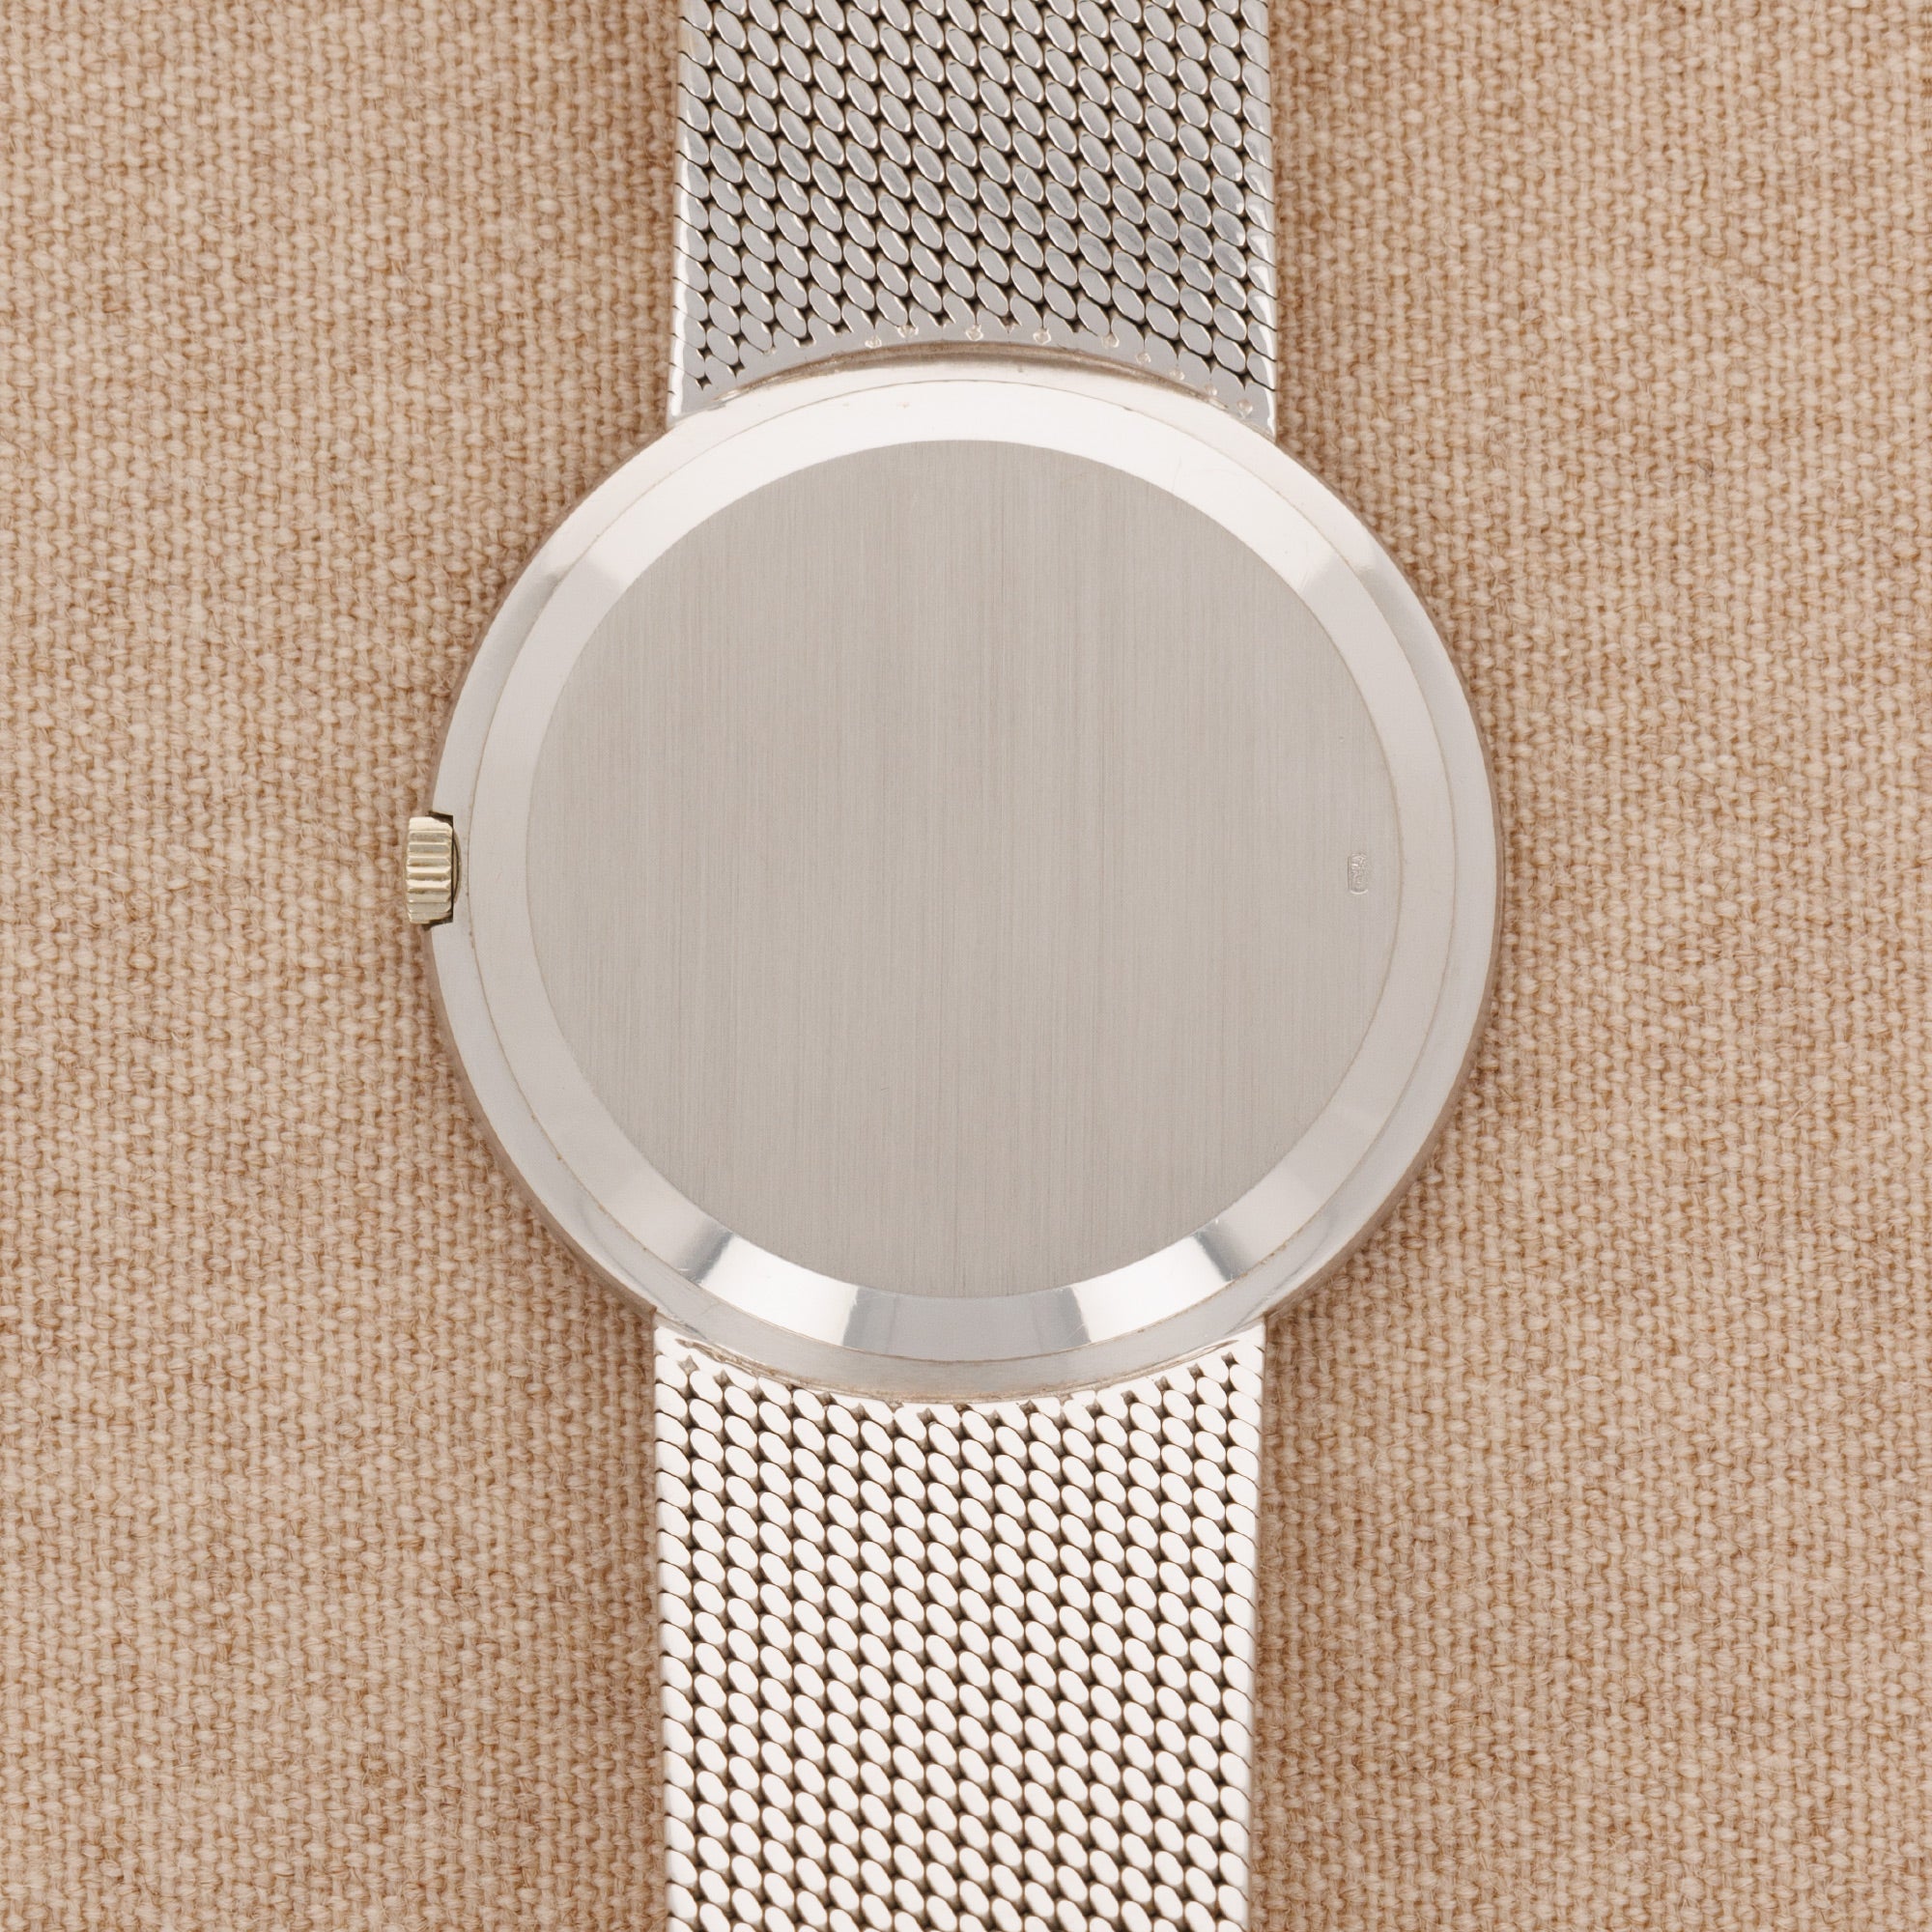 Patek Philippe White Gold Ultra-Thin Watch Ref. 3588 with Breguet Numerals